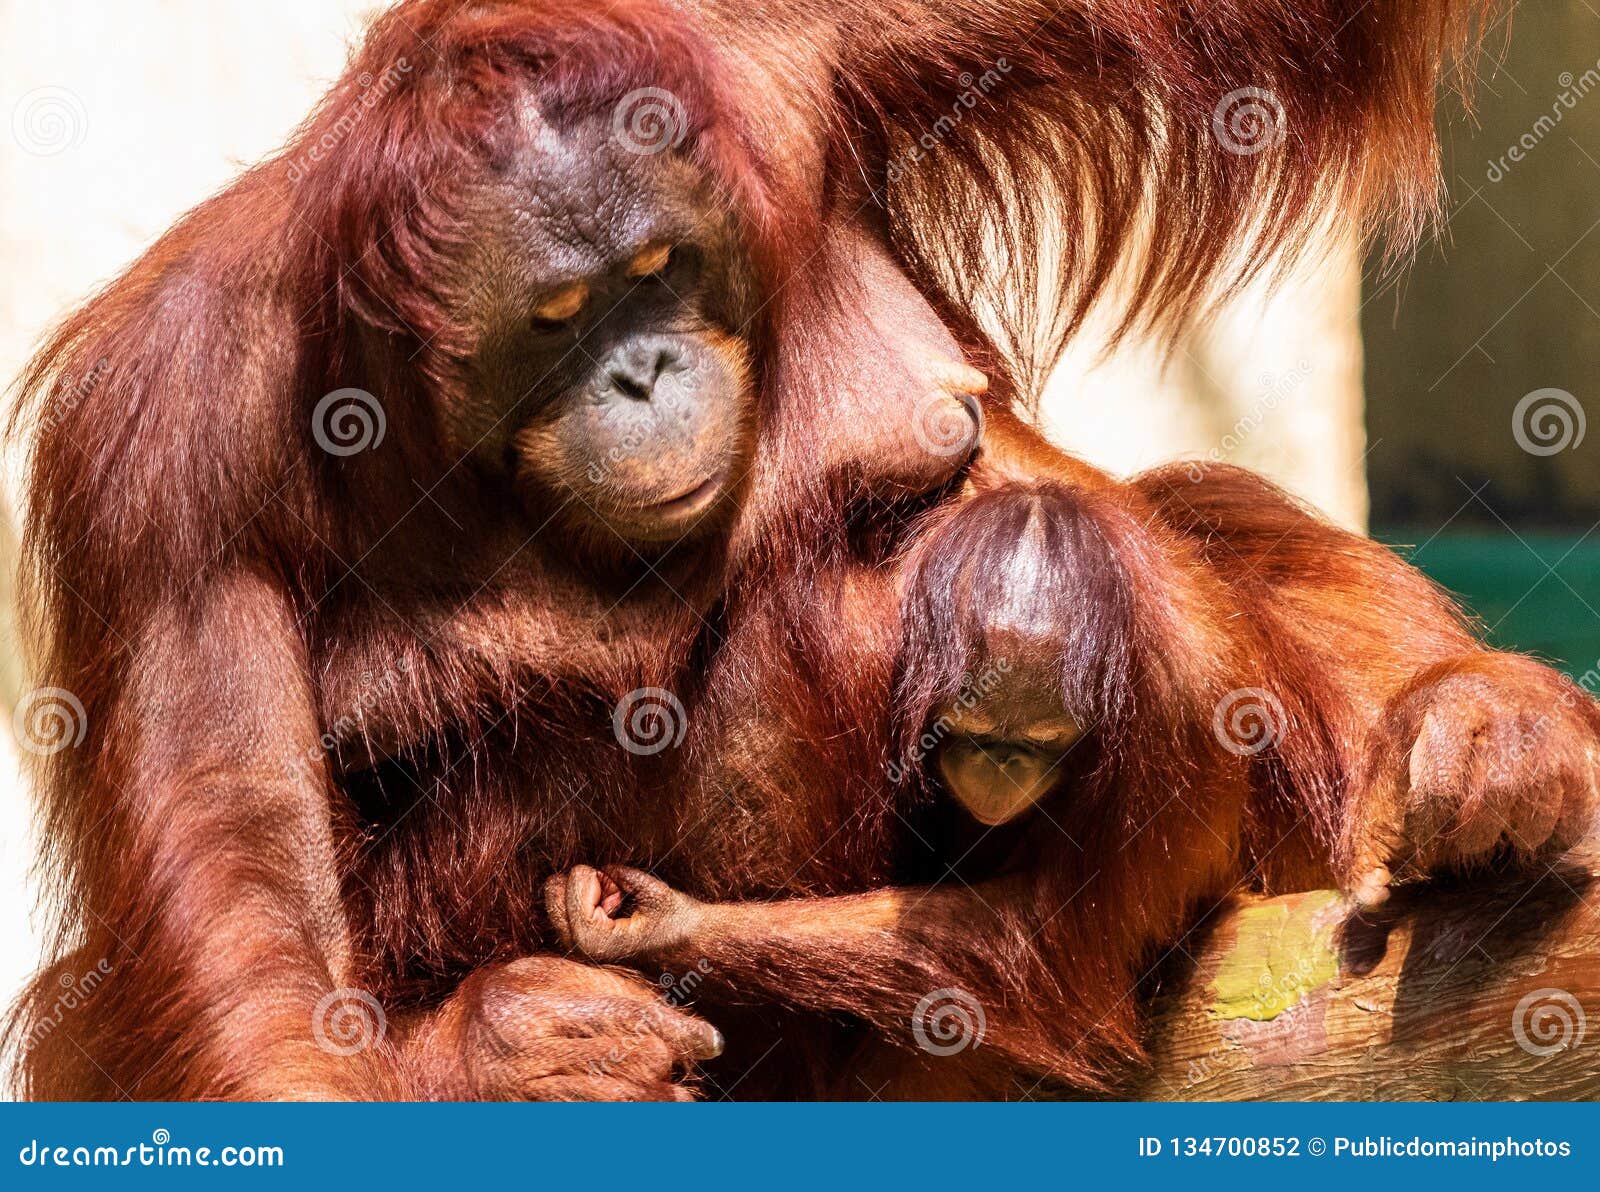 Download Orangutan, Mammal, Great Ape, Primate Picture. Image: 134700852